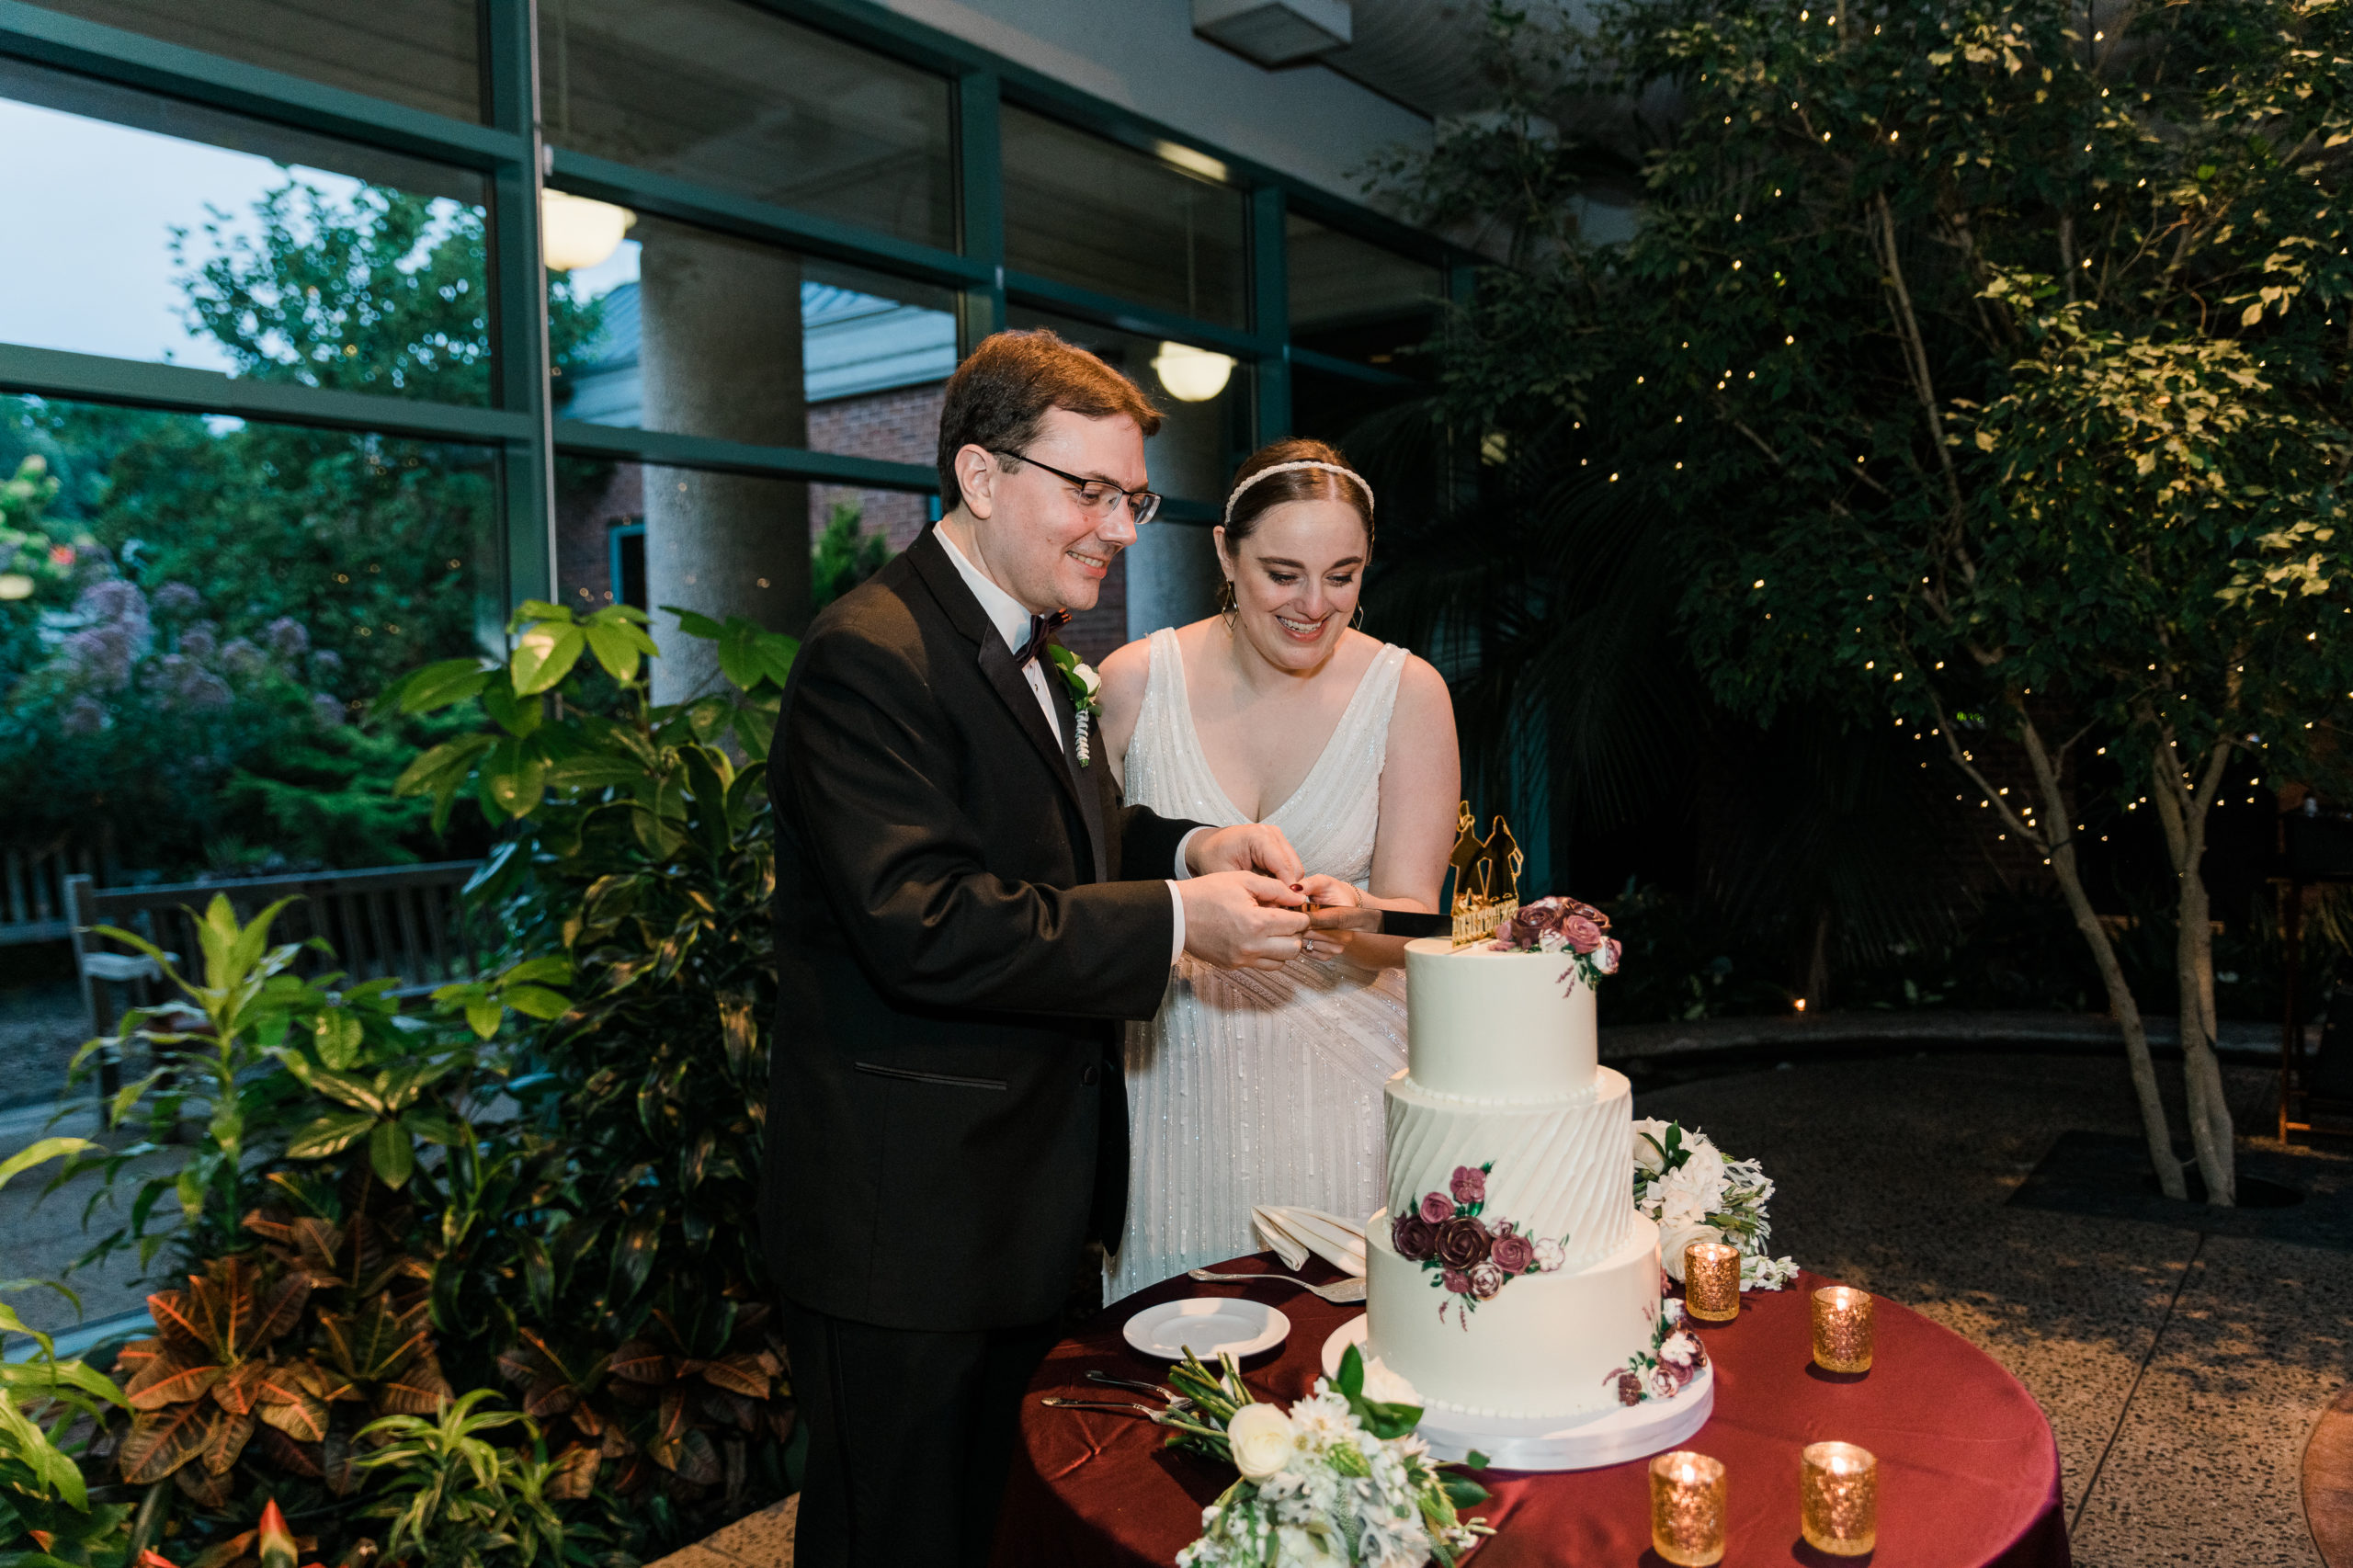 Bride and groom cutting a wedding cake at the Atrium at Meadowlark Botanical Gardens